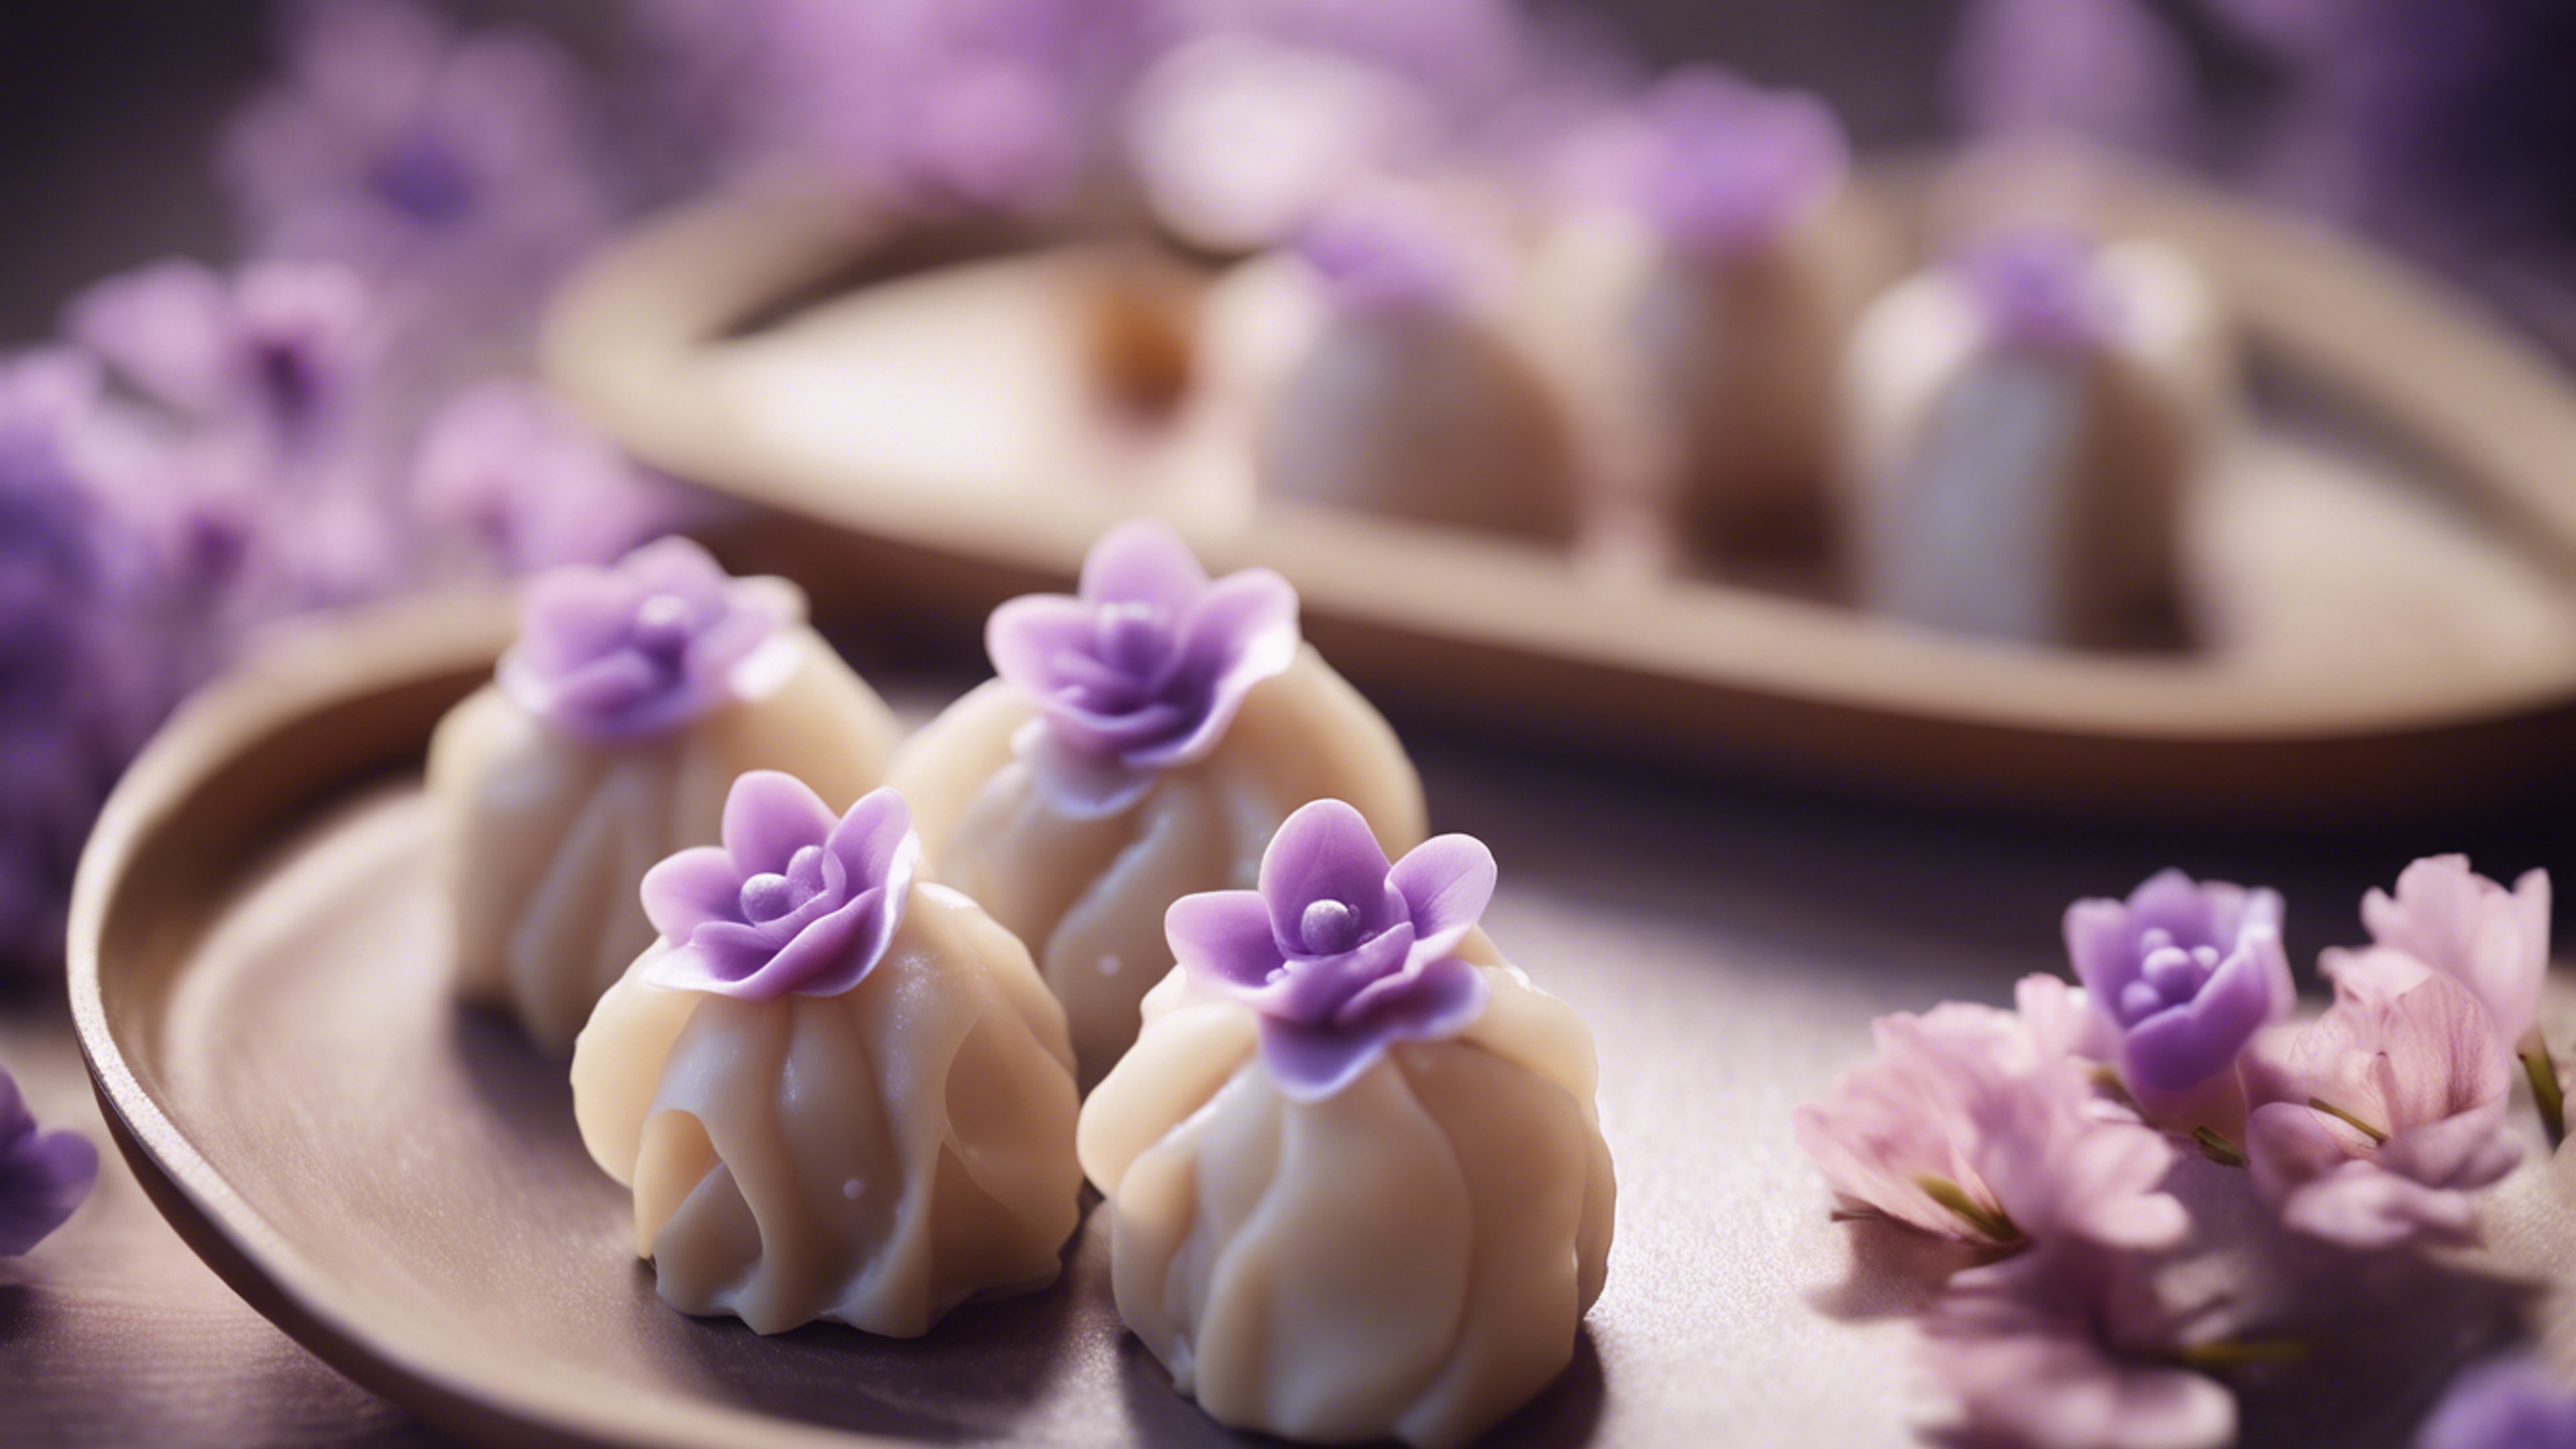 A kawaii styled dim sum dish, with delicate and light purple dumplings shaped like flowers. Hintergrund[29e111c9b013403690b4]